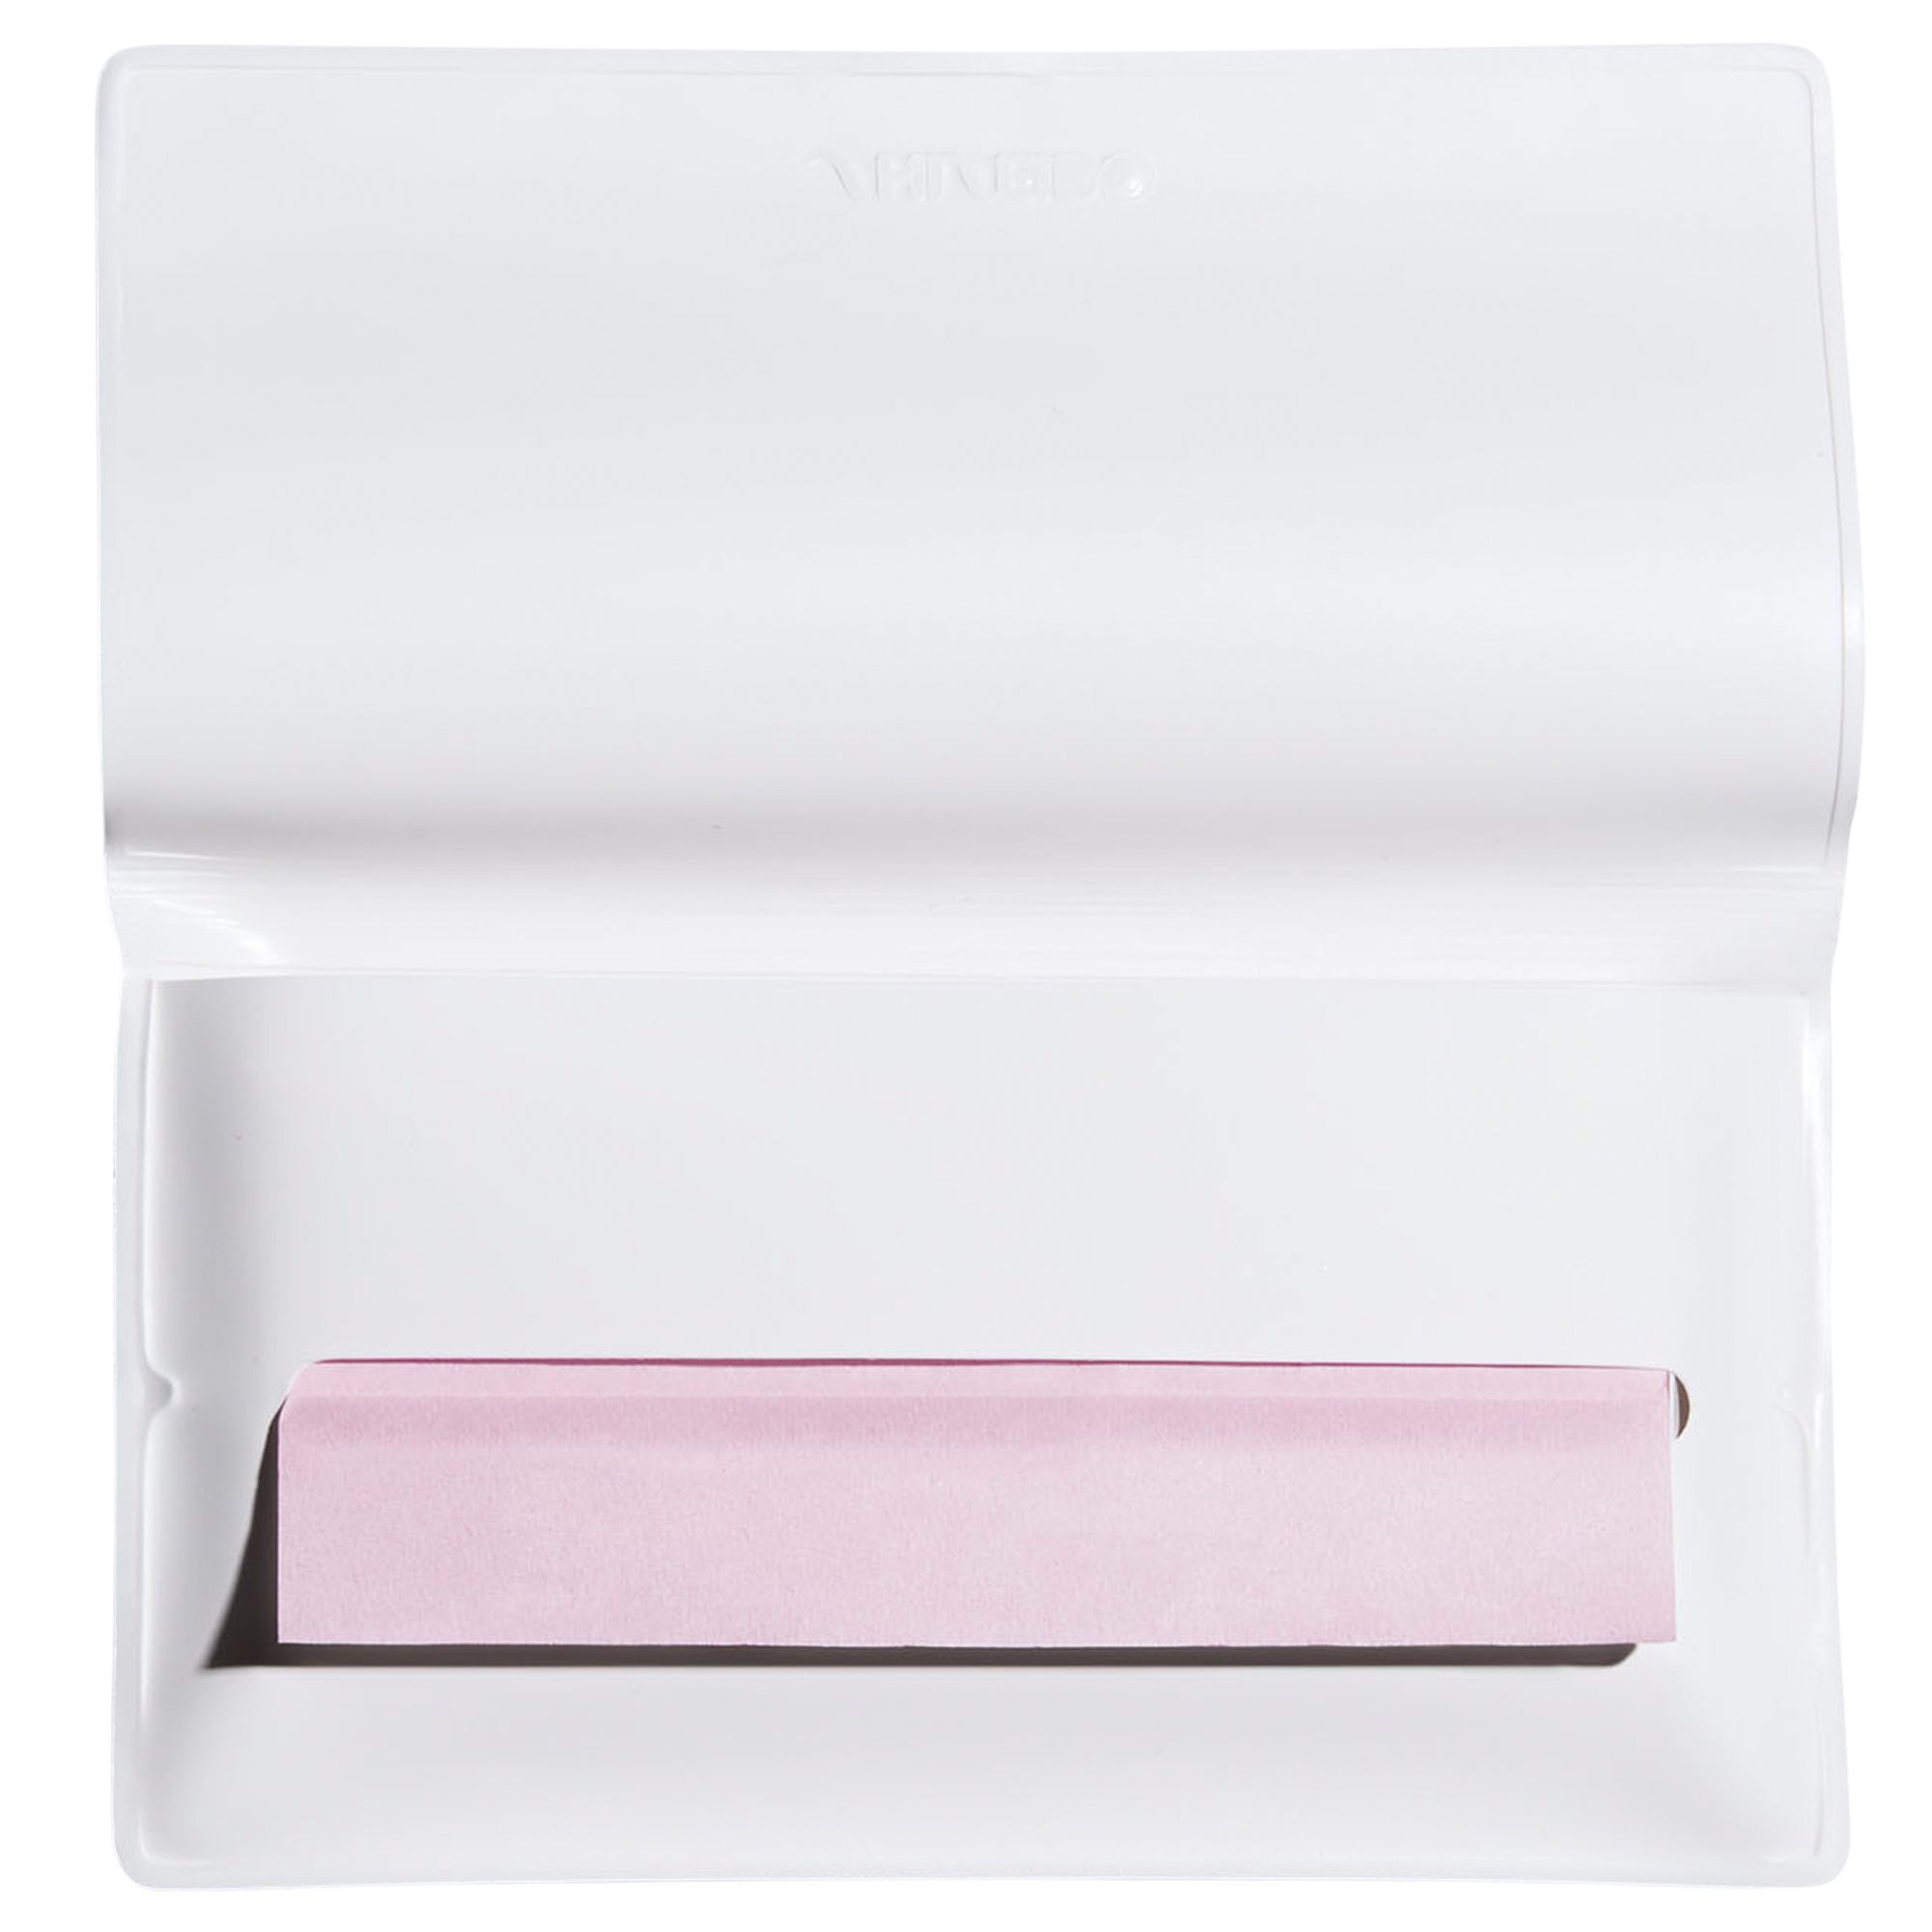 Shiseido Oil Control Blotting Paper, x 100